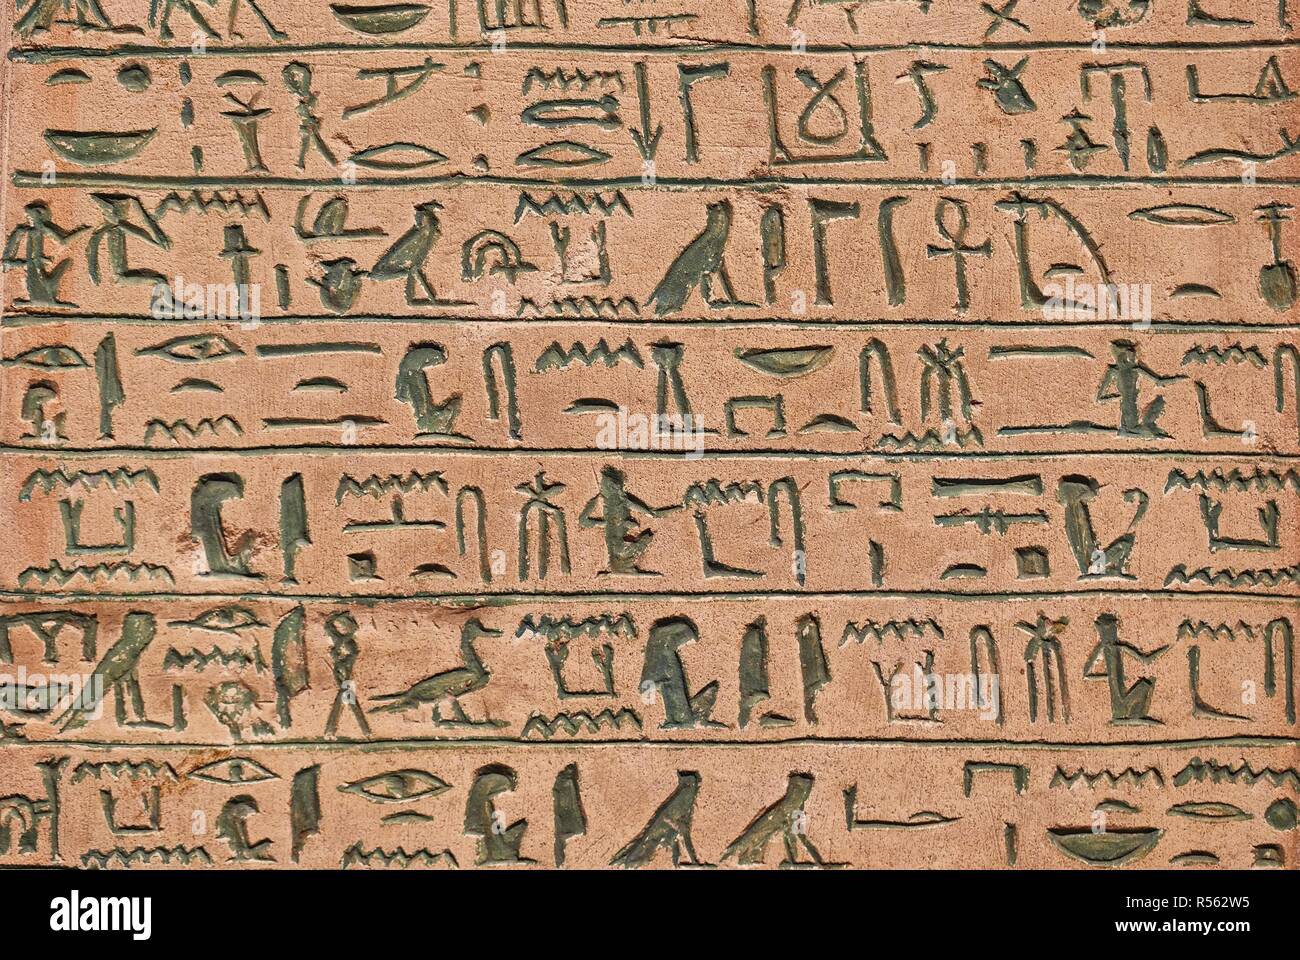 Ancient Hieroglyphic Script Stock Photo